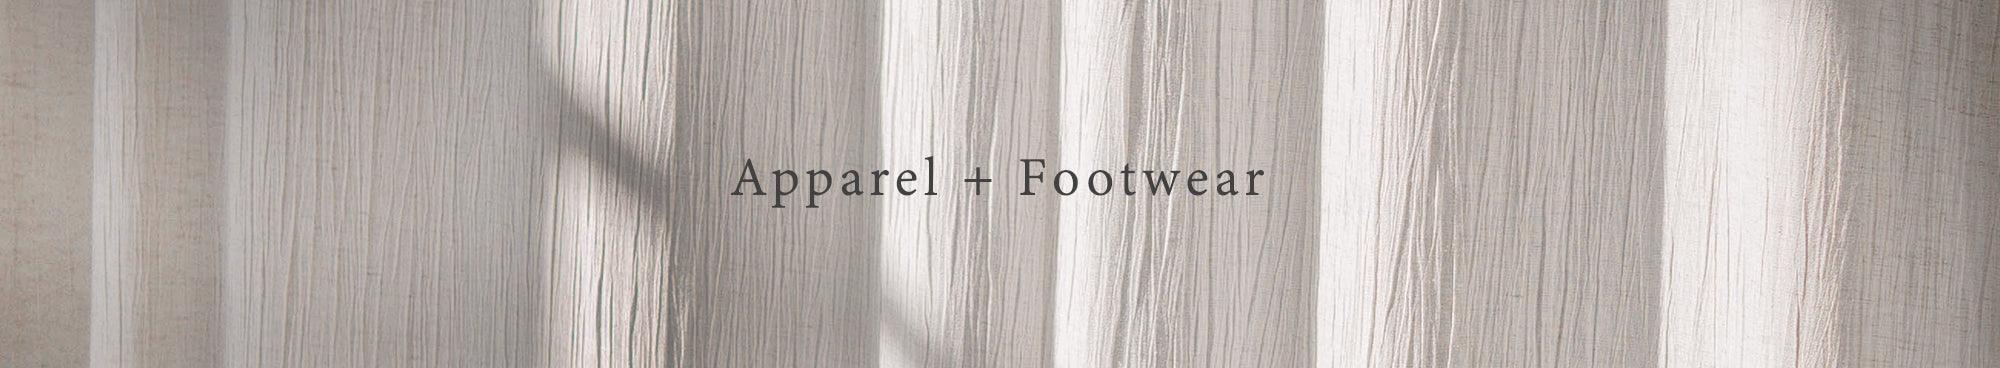 Apparel + Footwear - Rikumo